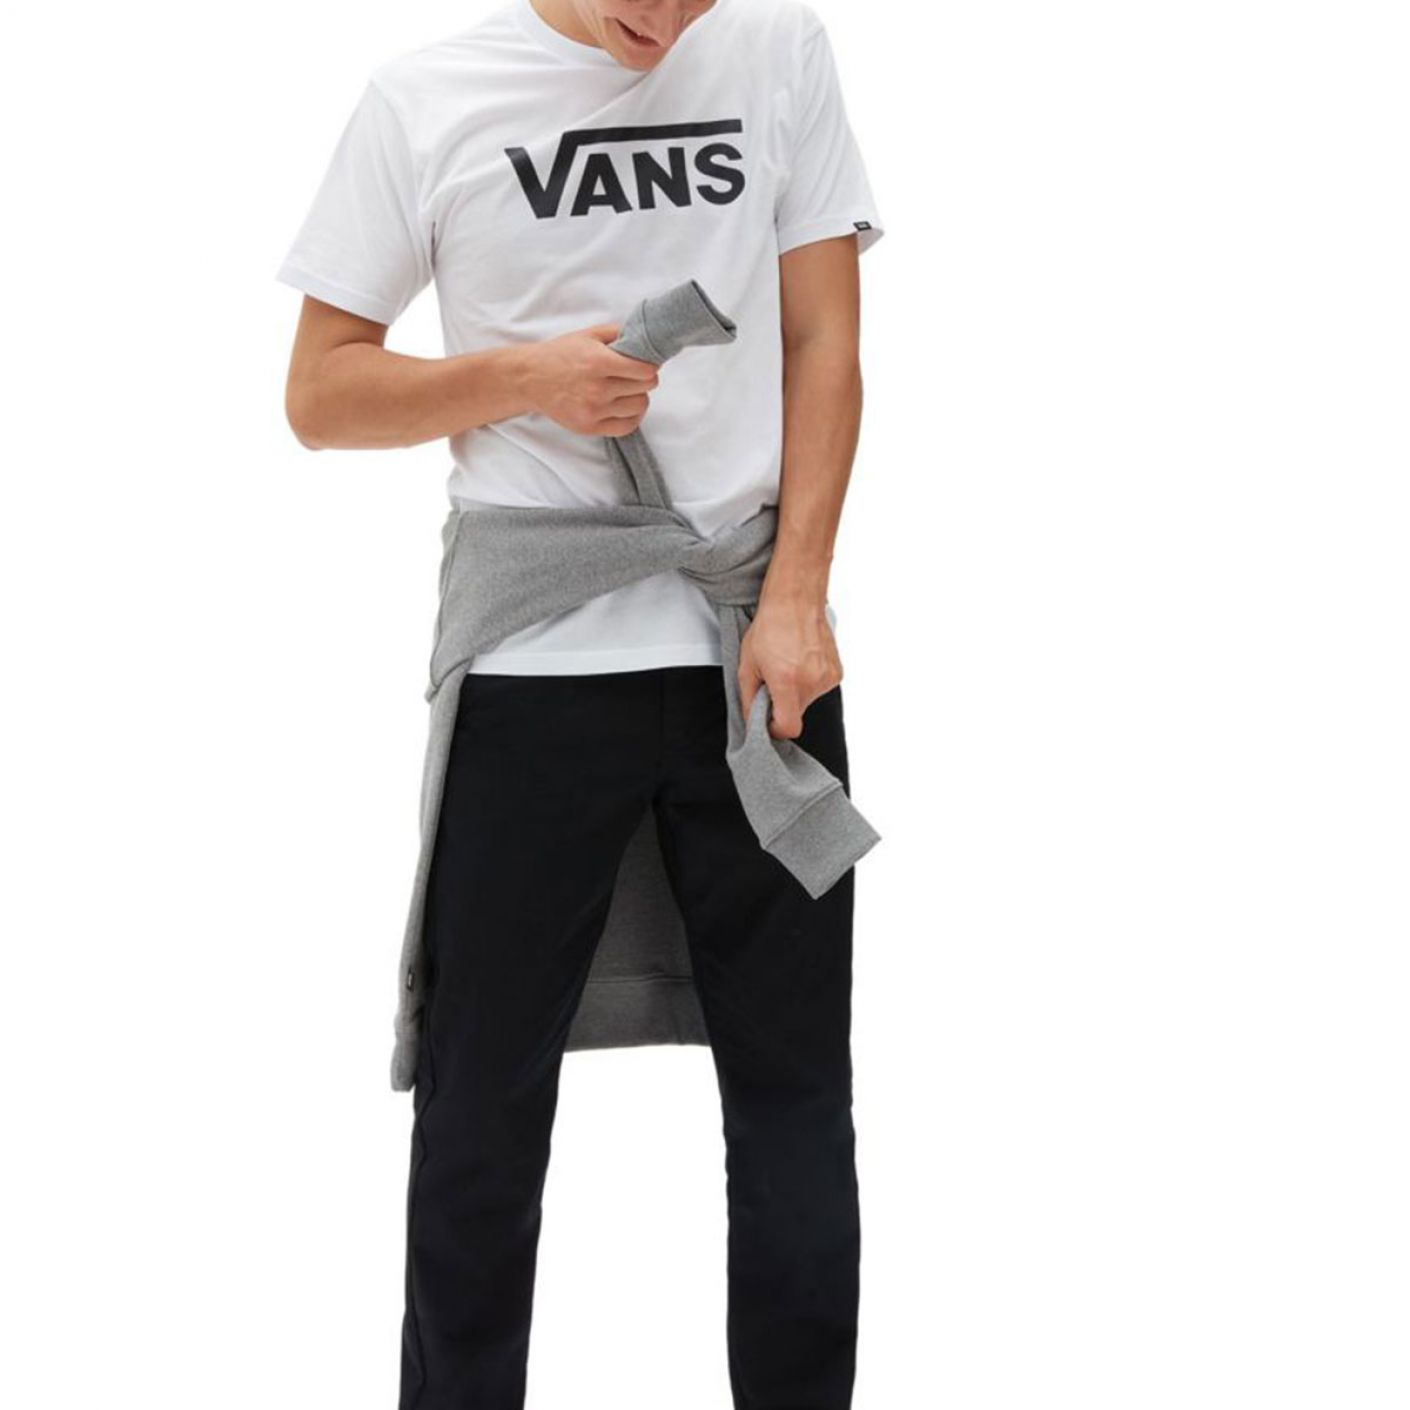 Vans T-shirt Man Classic White